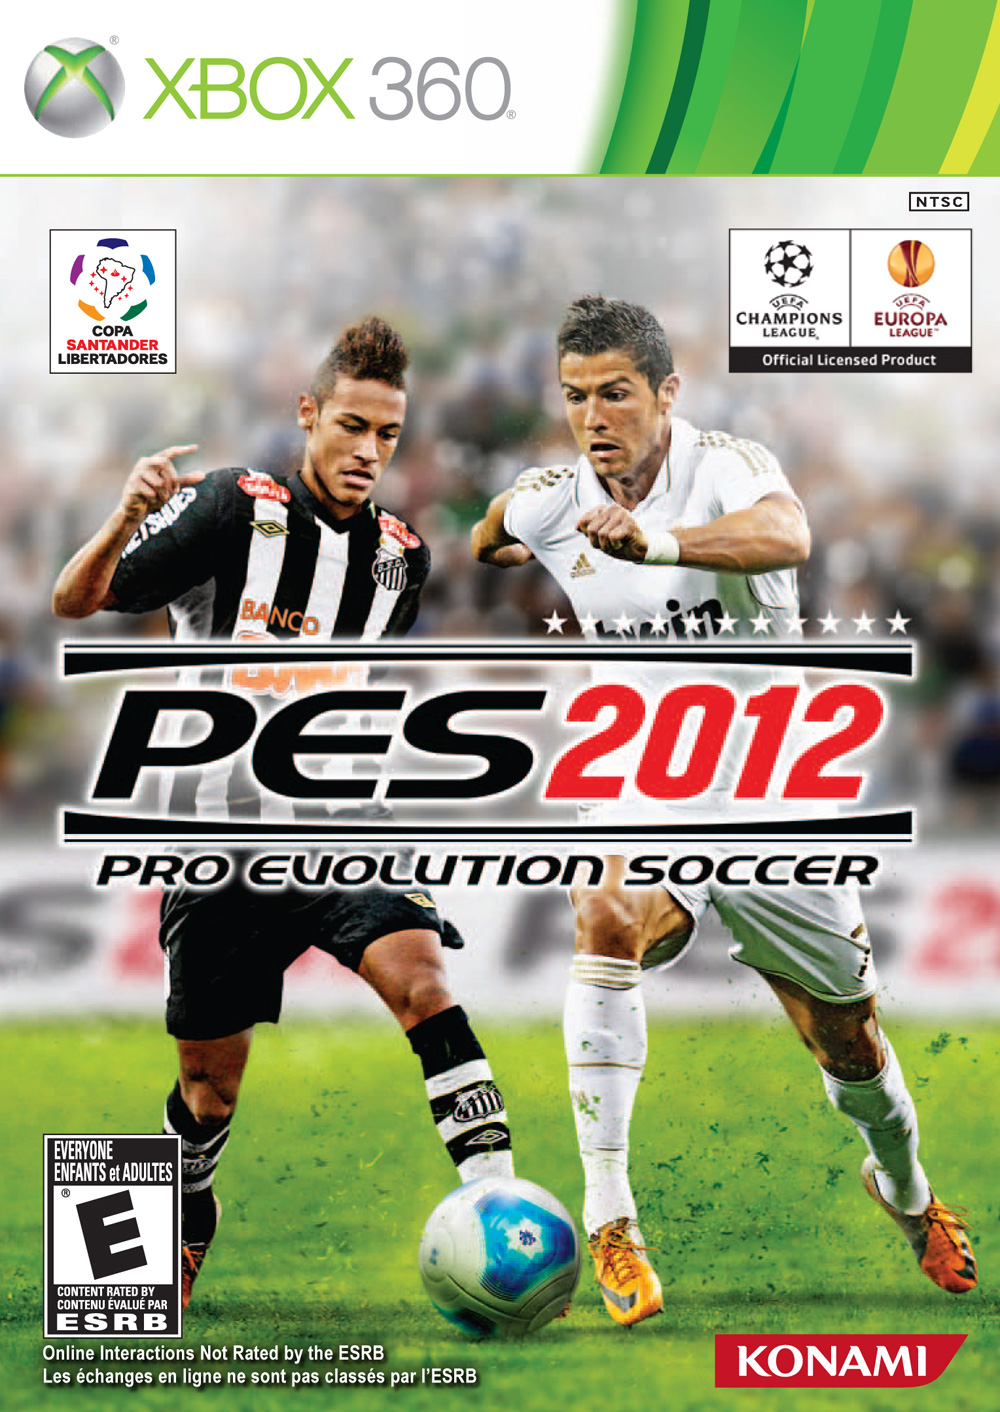 Pro Evolution Soccer 2012, Videogame soundtracks Wiki